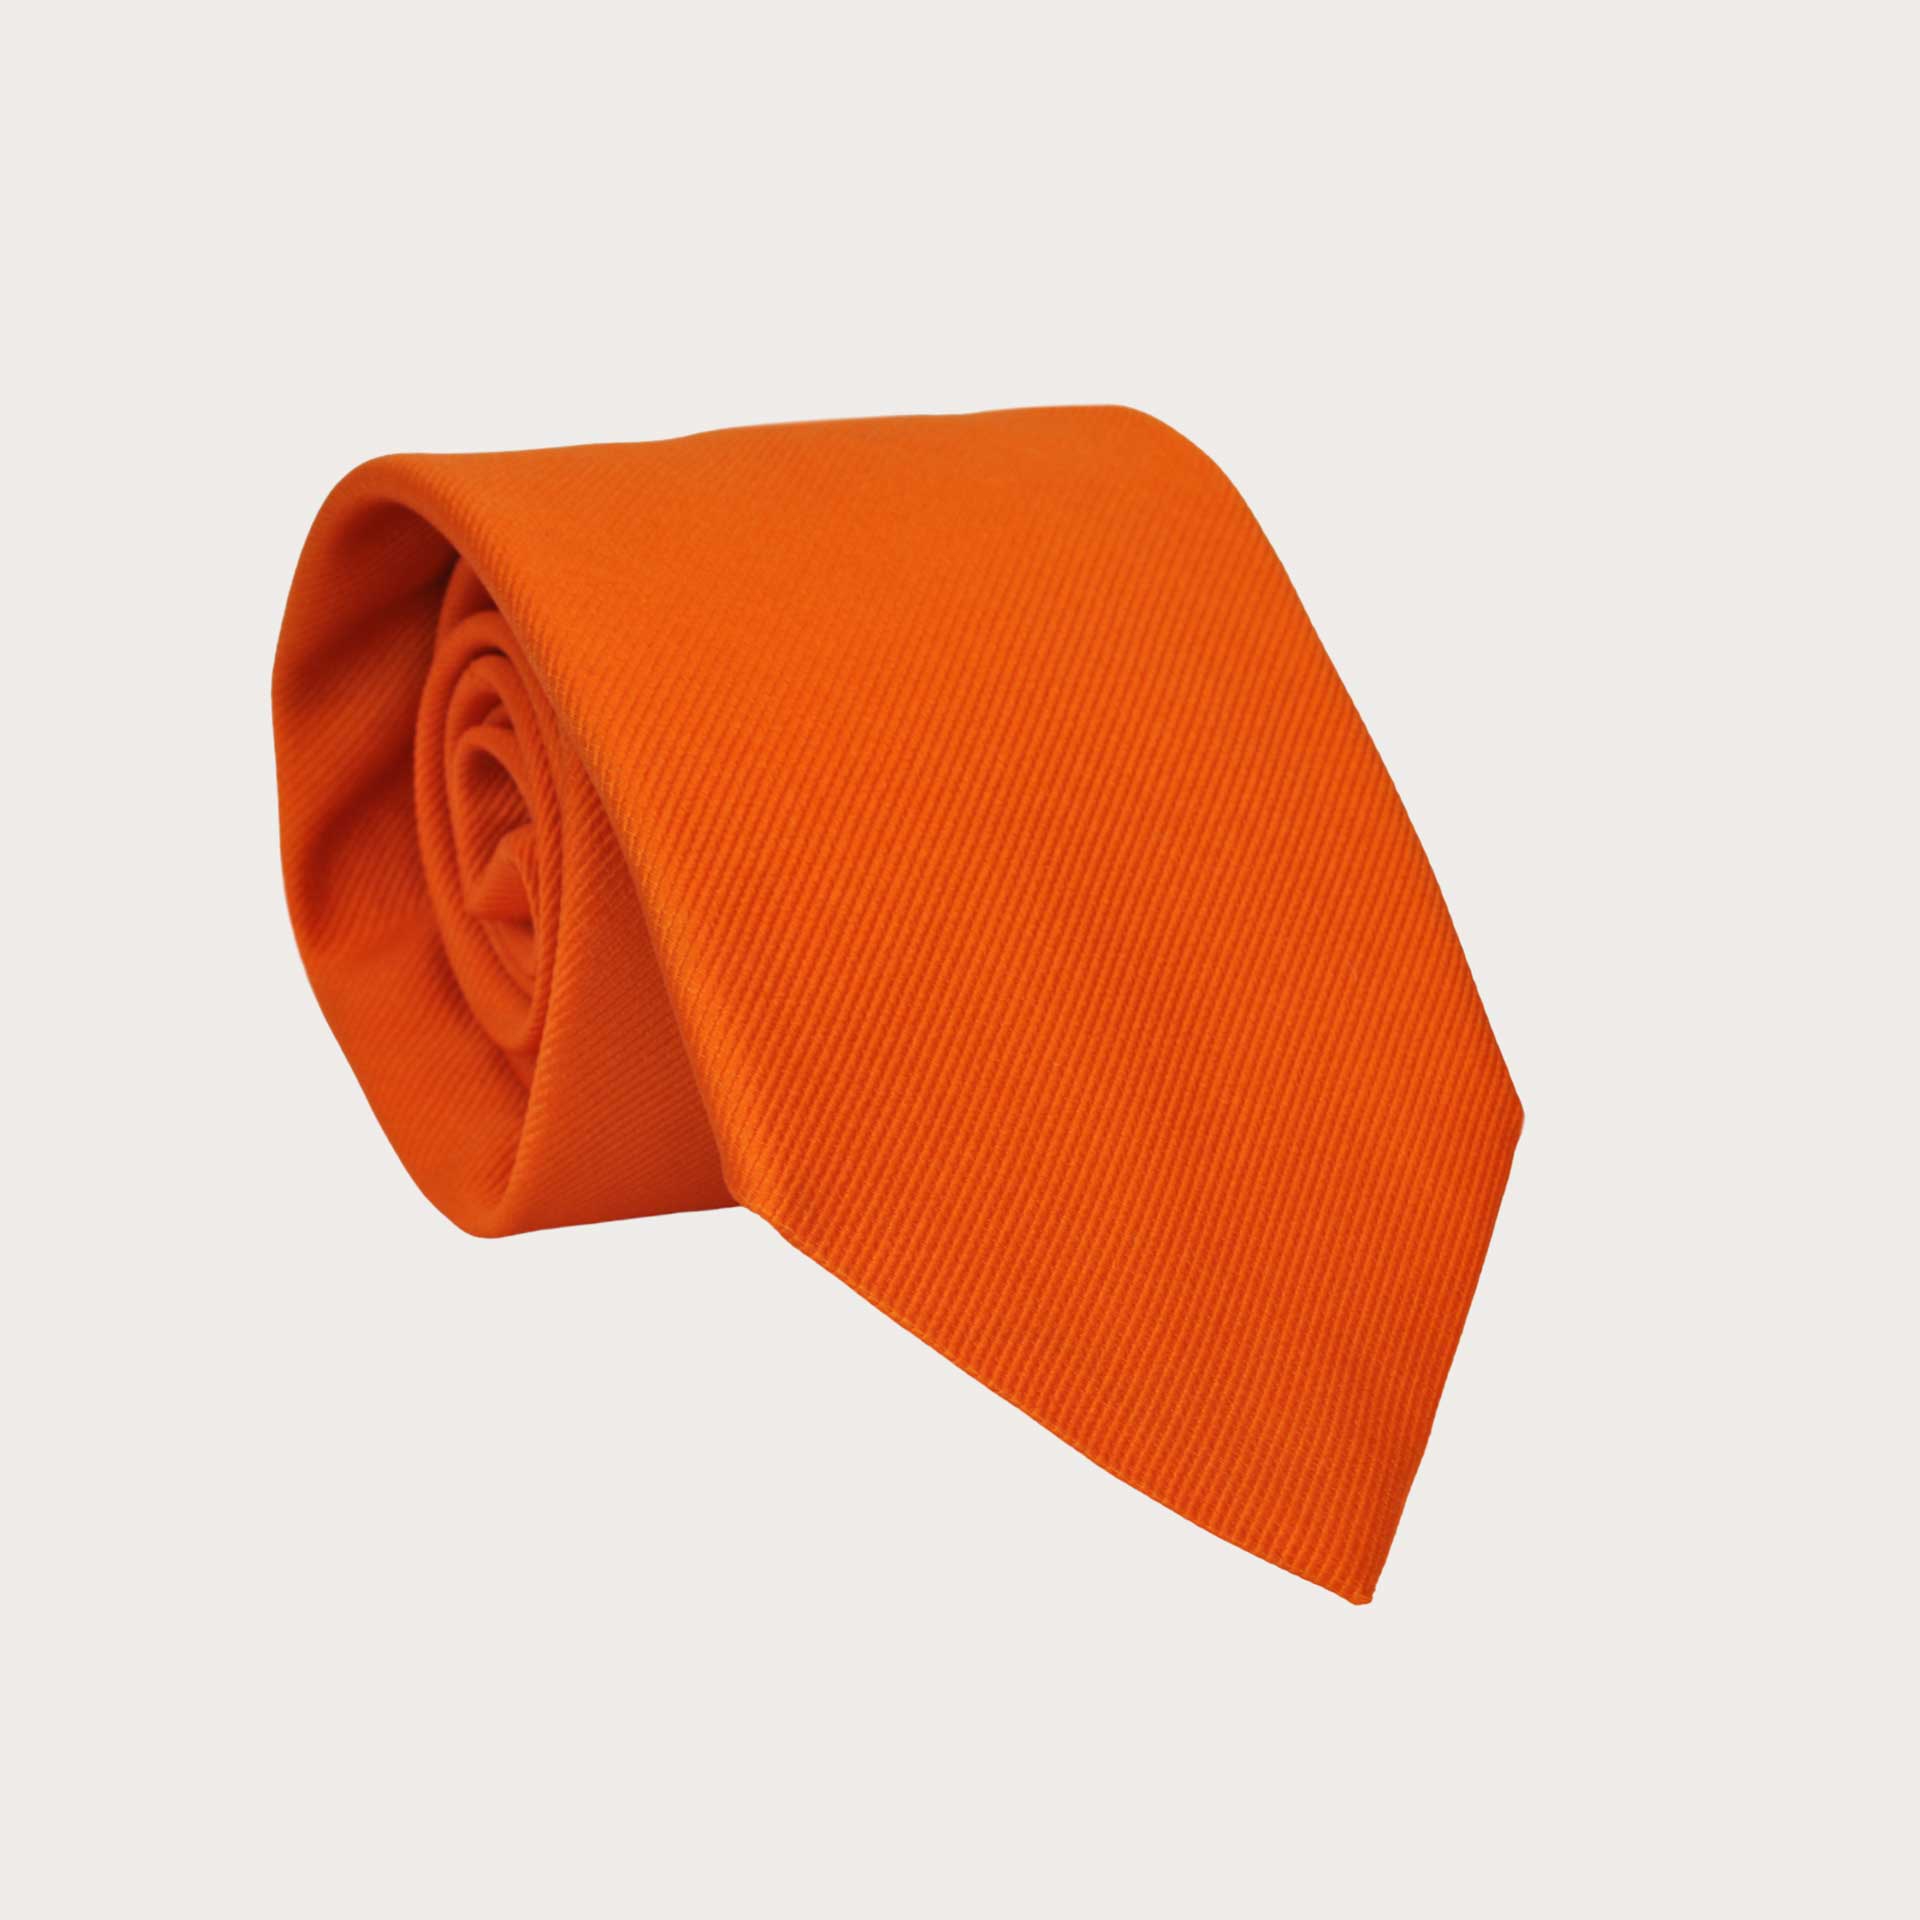 BRUCLE Exclusiva corbata de seda naranja